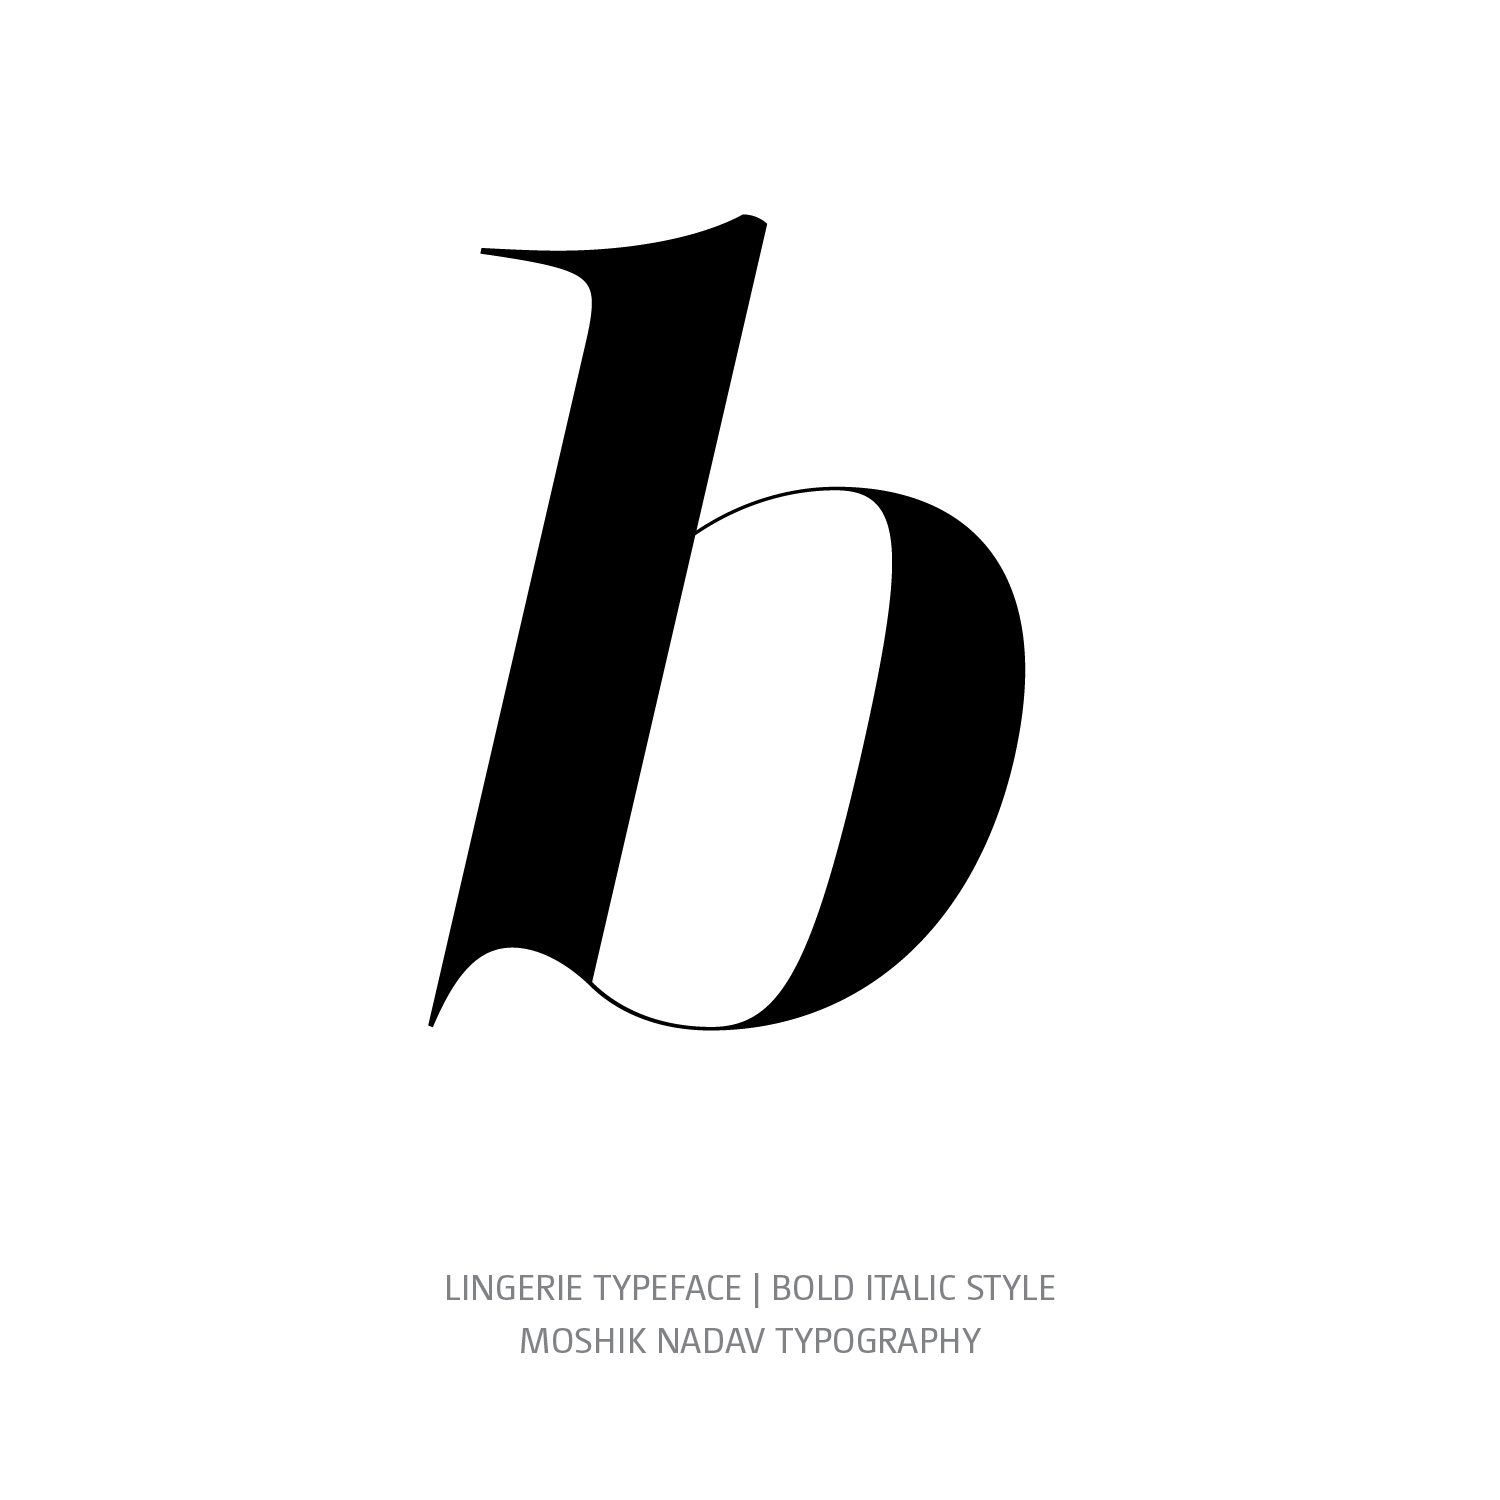 Lingerie Typeface Bold Italic b